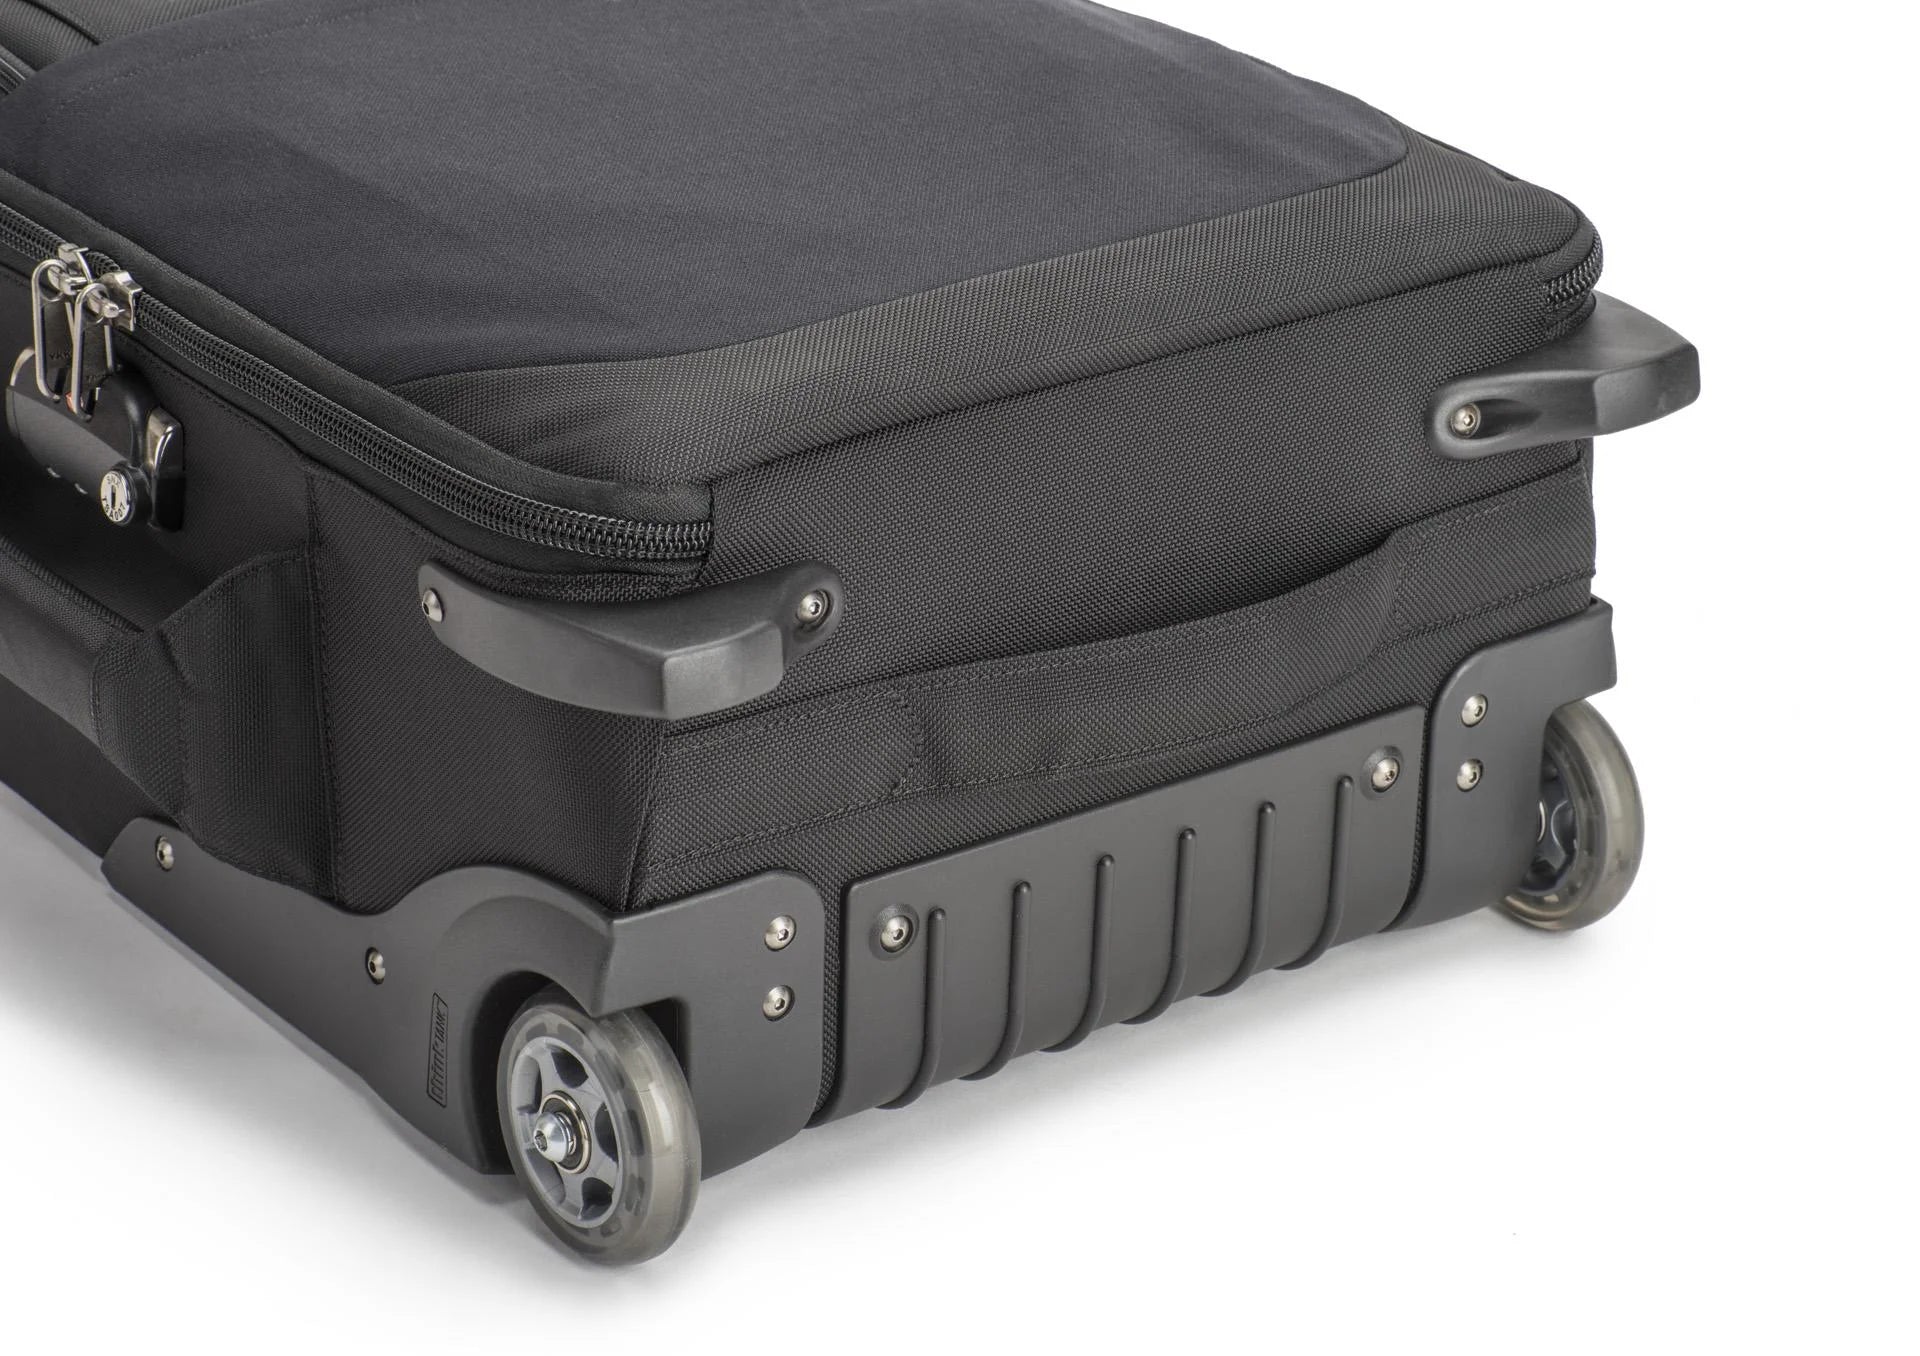 Think Tank Airport International V3 roller bag/case